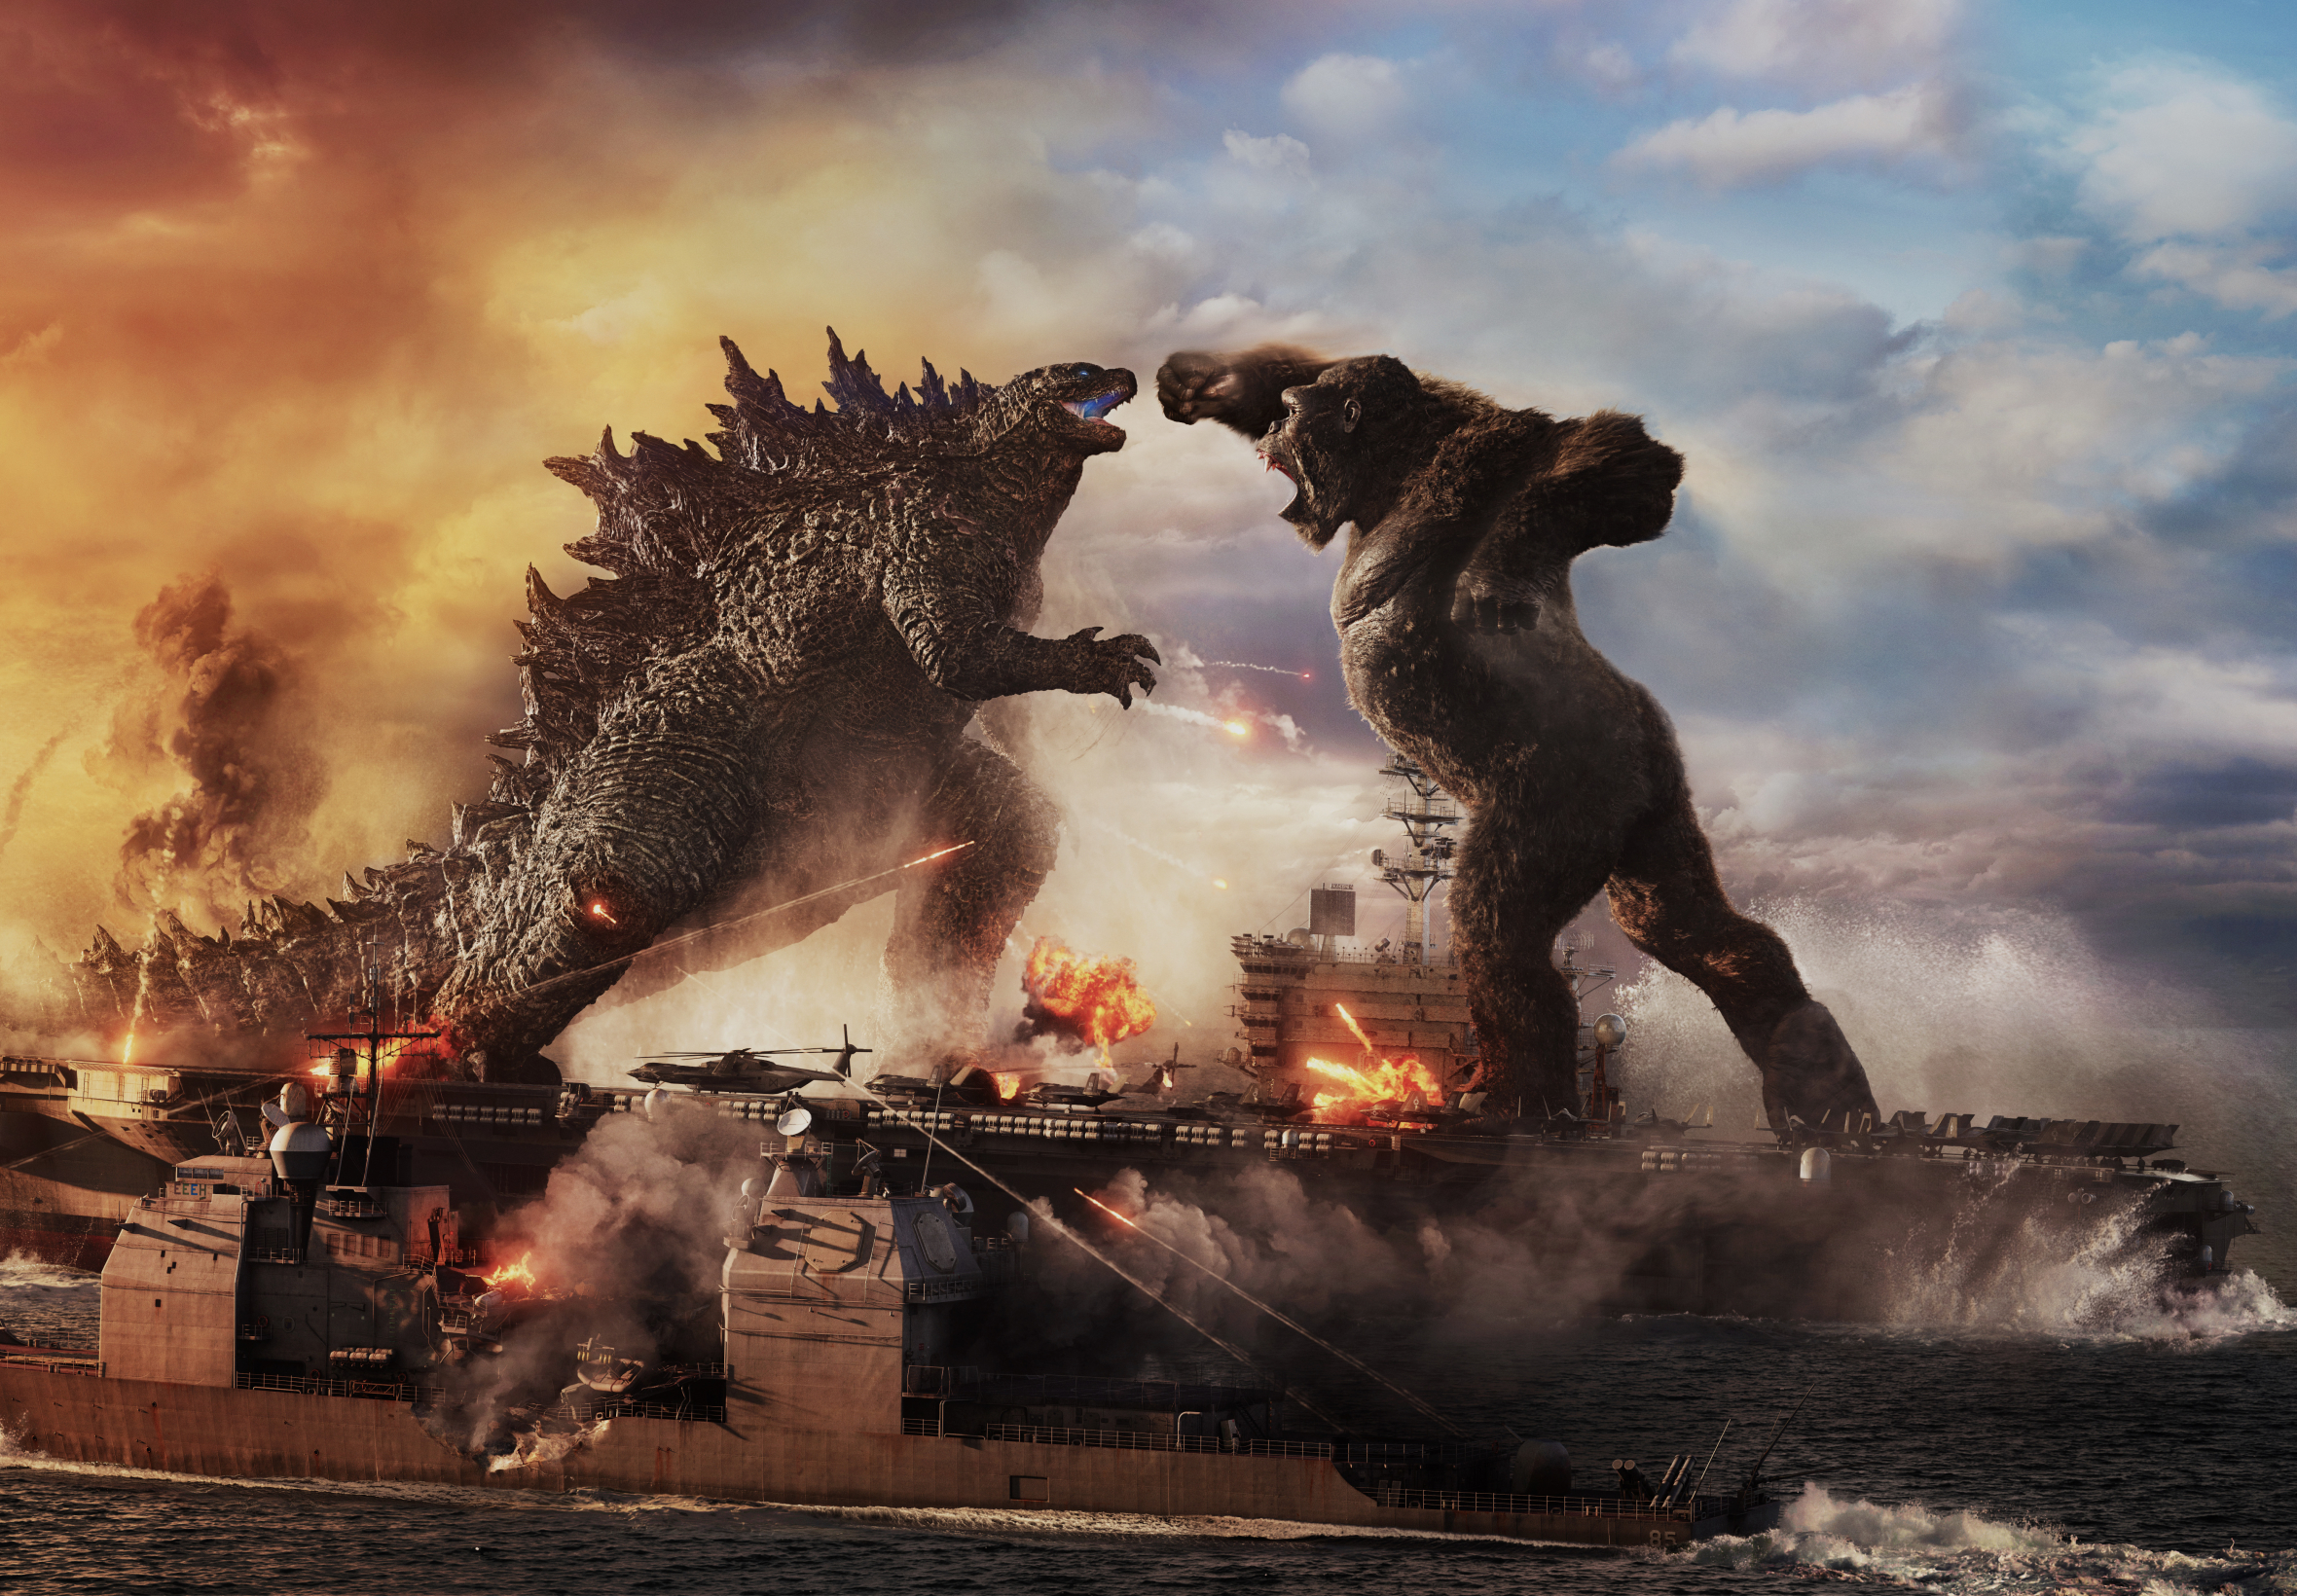 Godzilla (Monsterverse) wallpapers for desktop, download free Godzilla  (Monsterverse) pictures and backgrounds for PC 